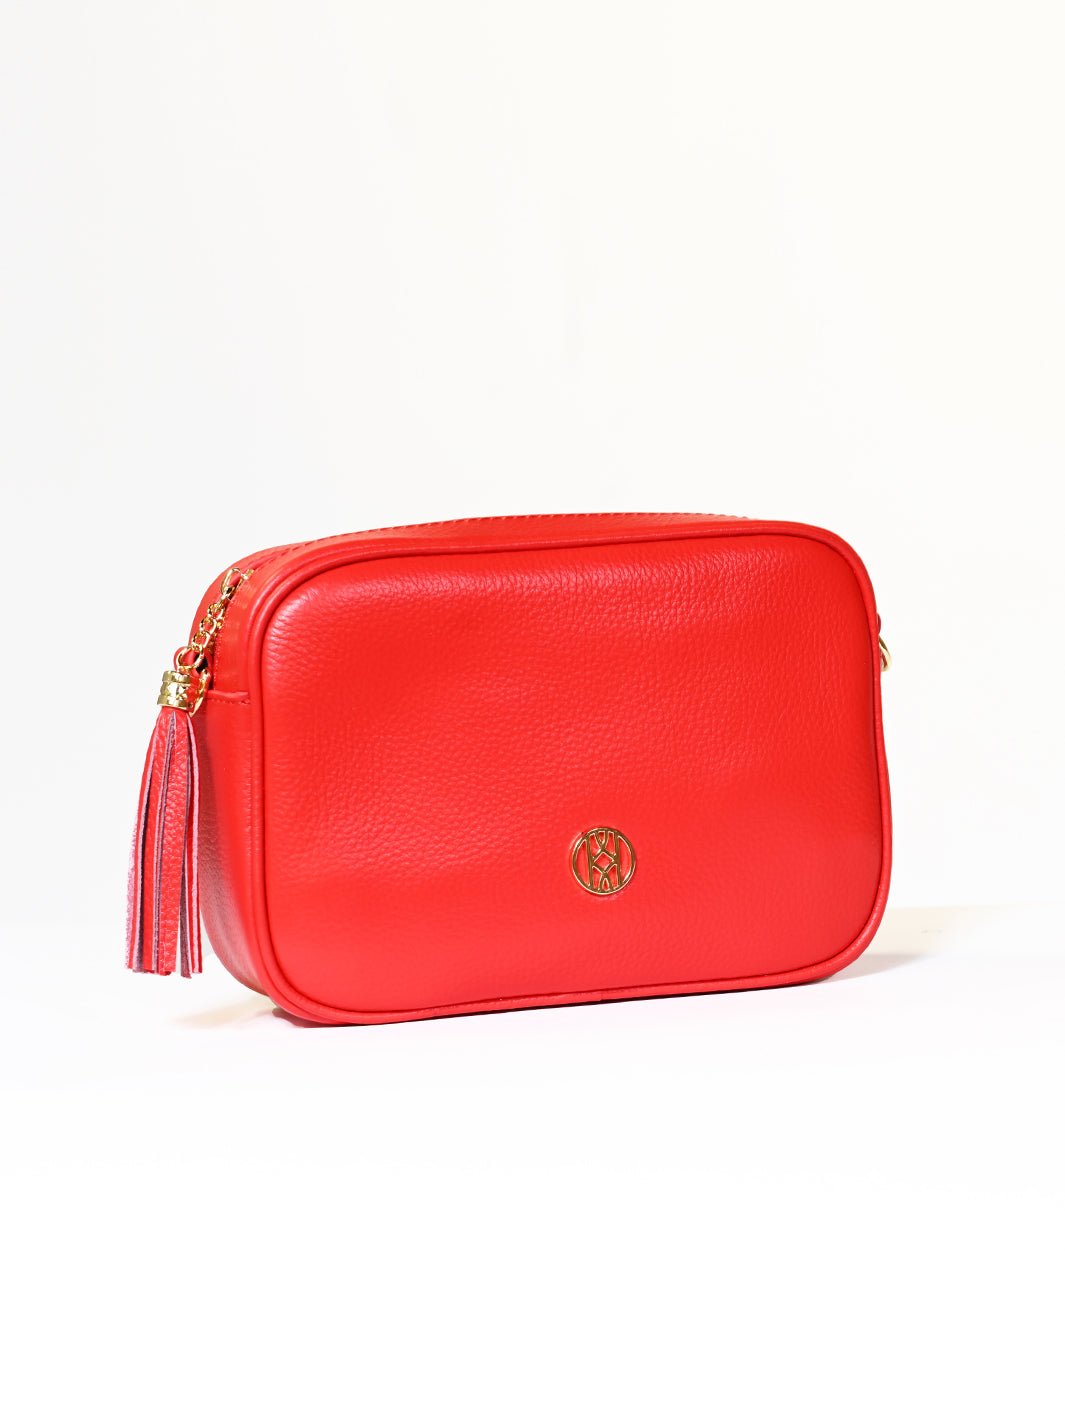 Leather Side Bag Red ACCESSORY - HANDBAG jeanpierreklifa.com   